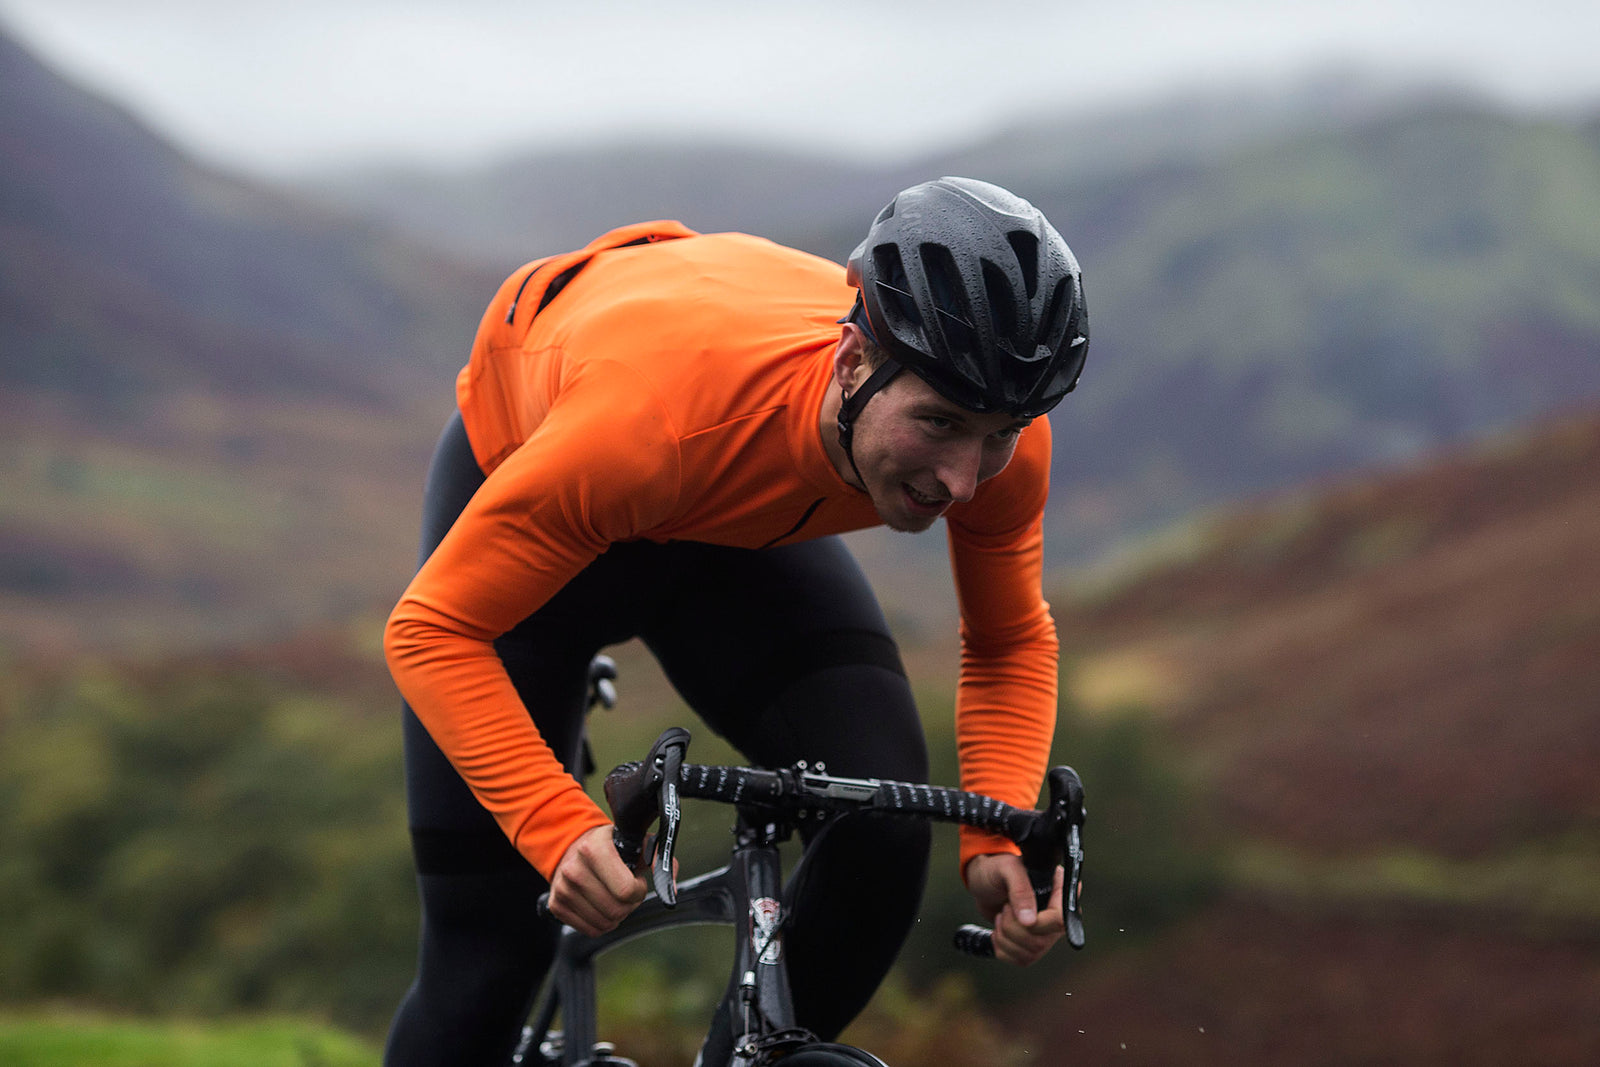 orange long sleeve cycling jersey